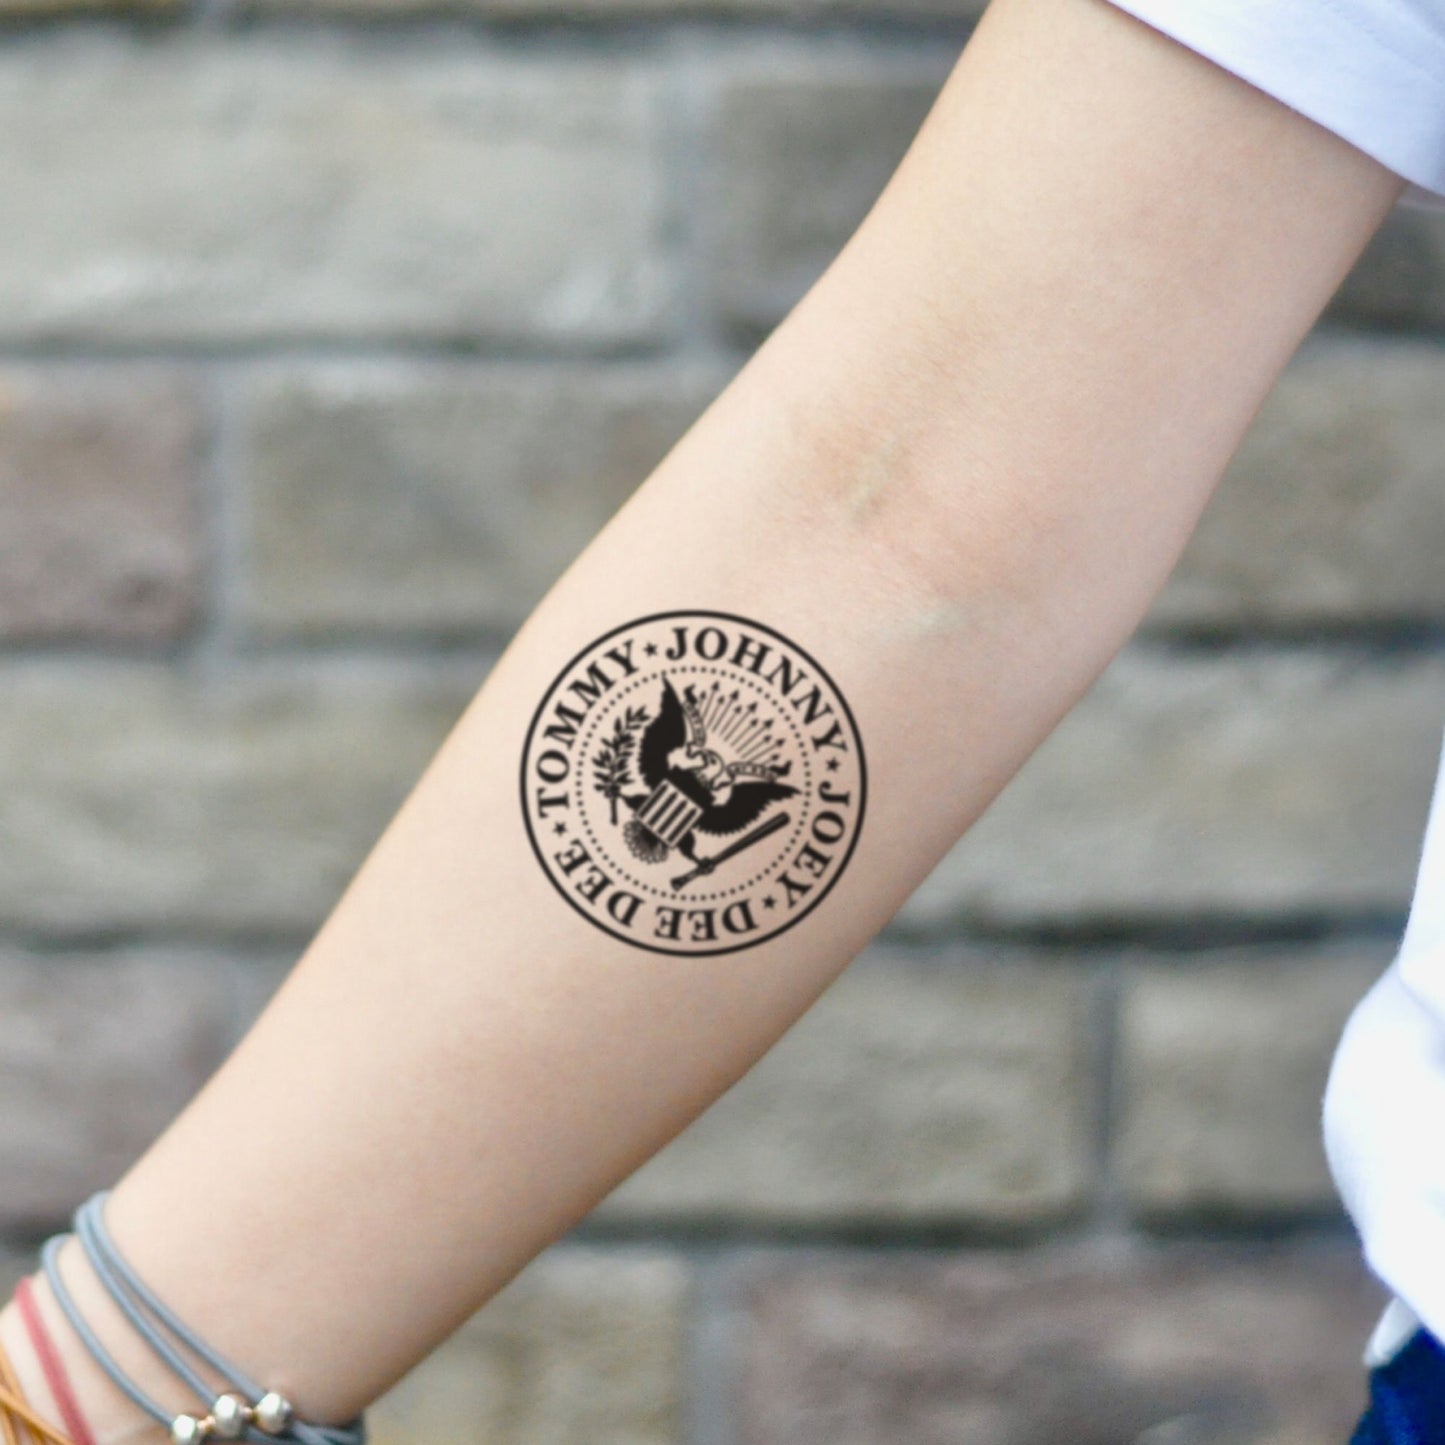 fake small ramones logo illustrative temporary tattoo sticker design idea on inner arm